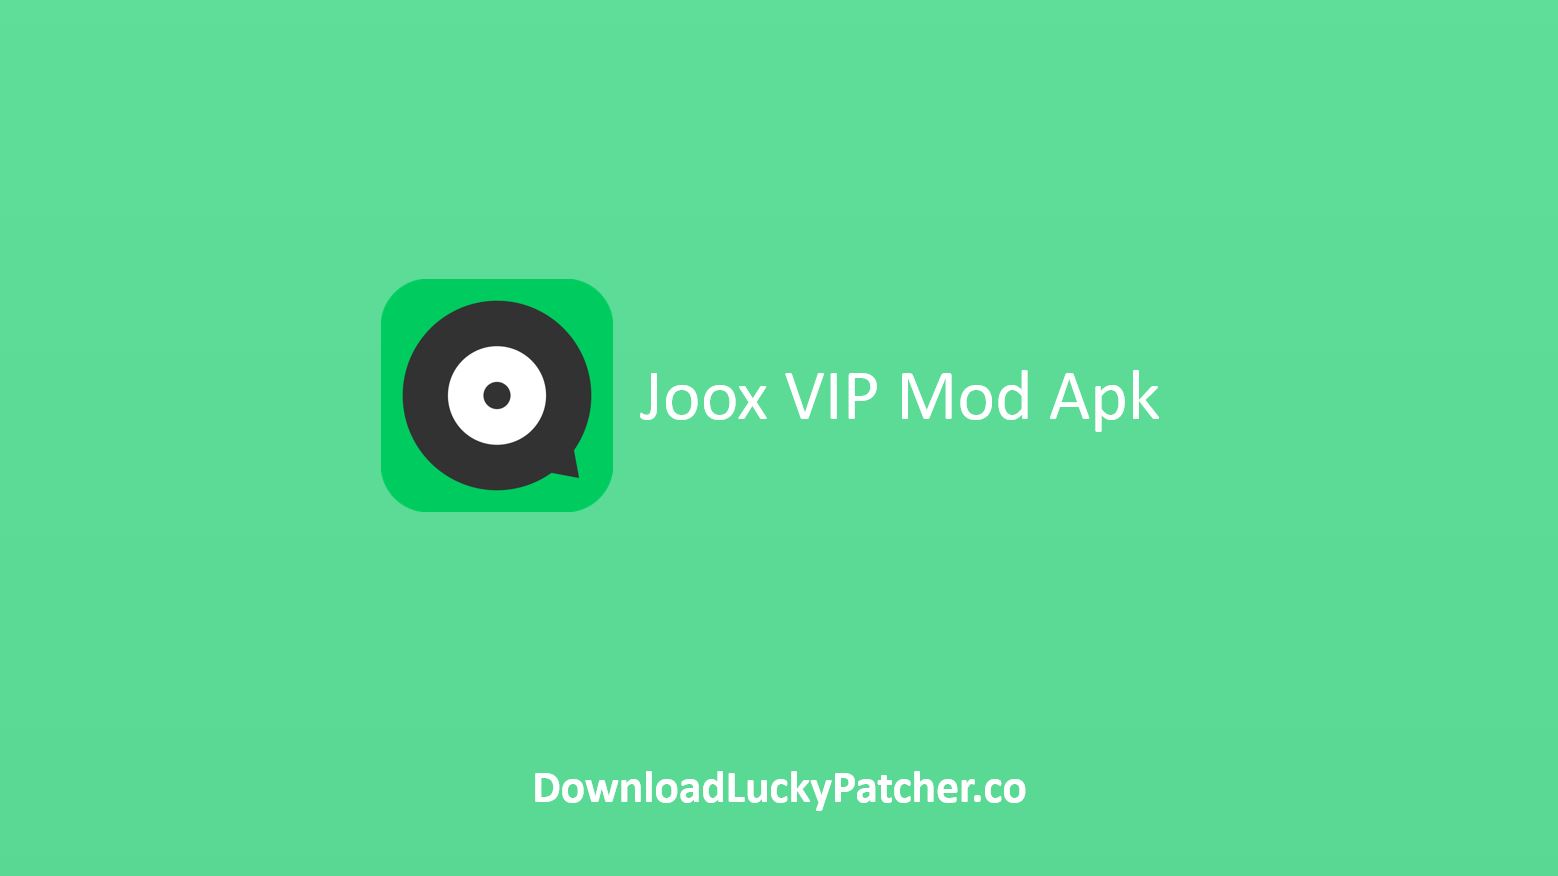 Joox VIP Mod Apk